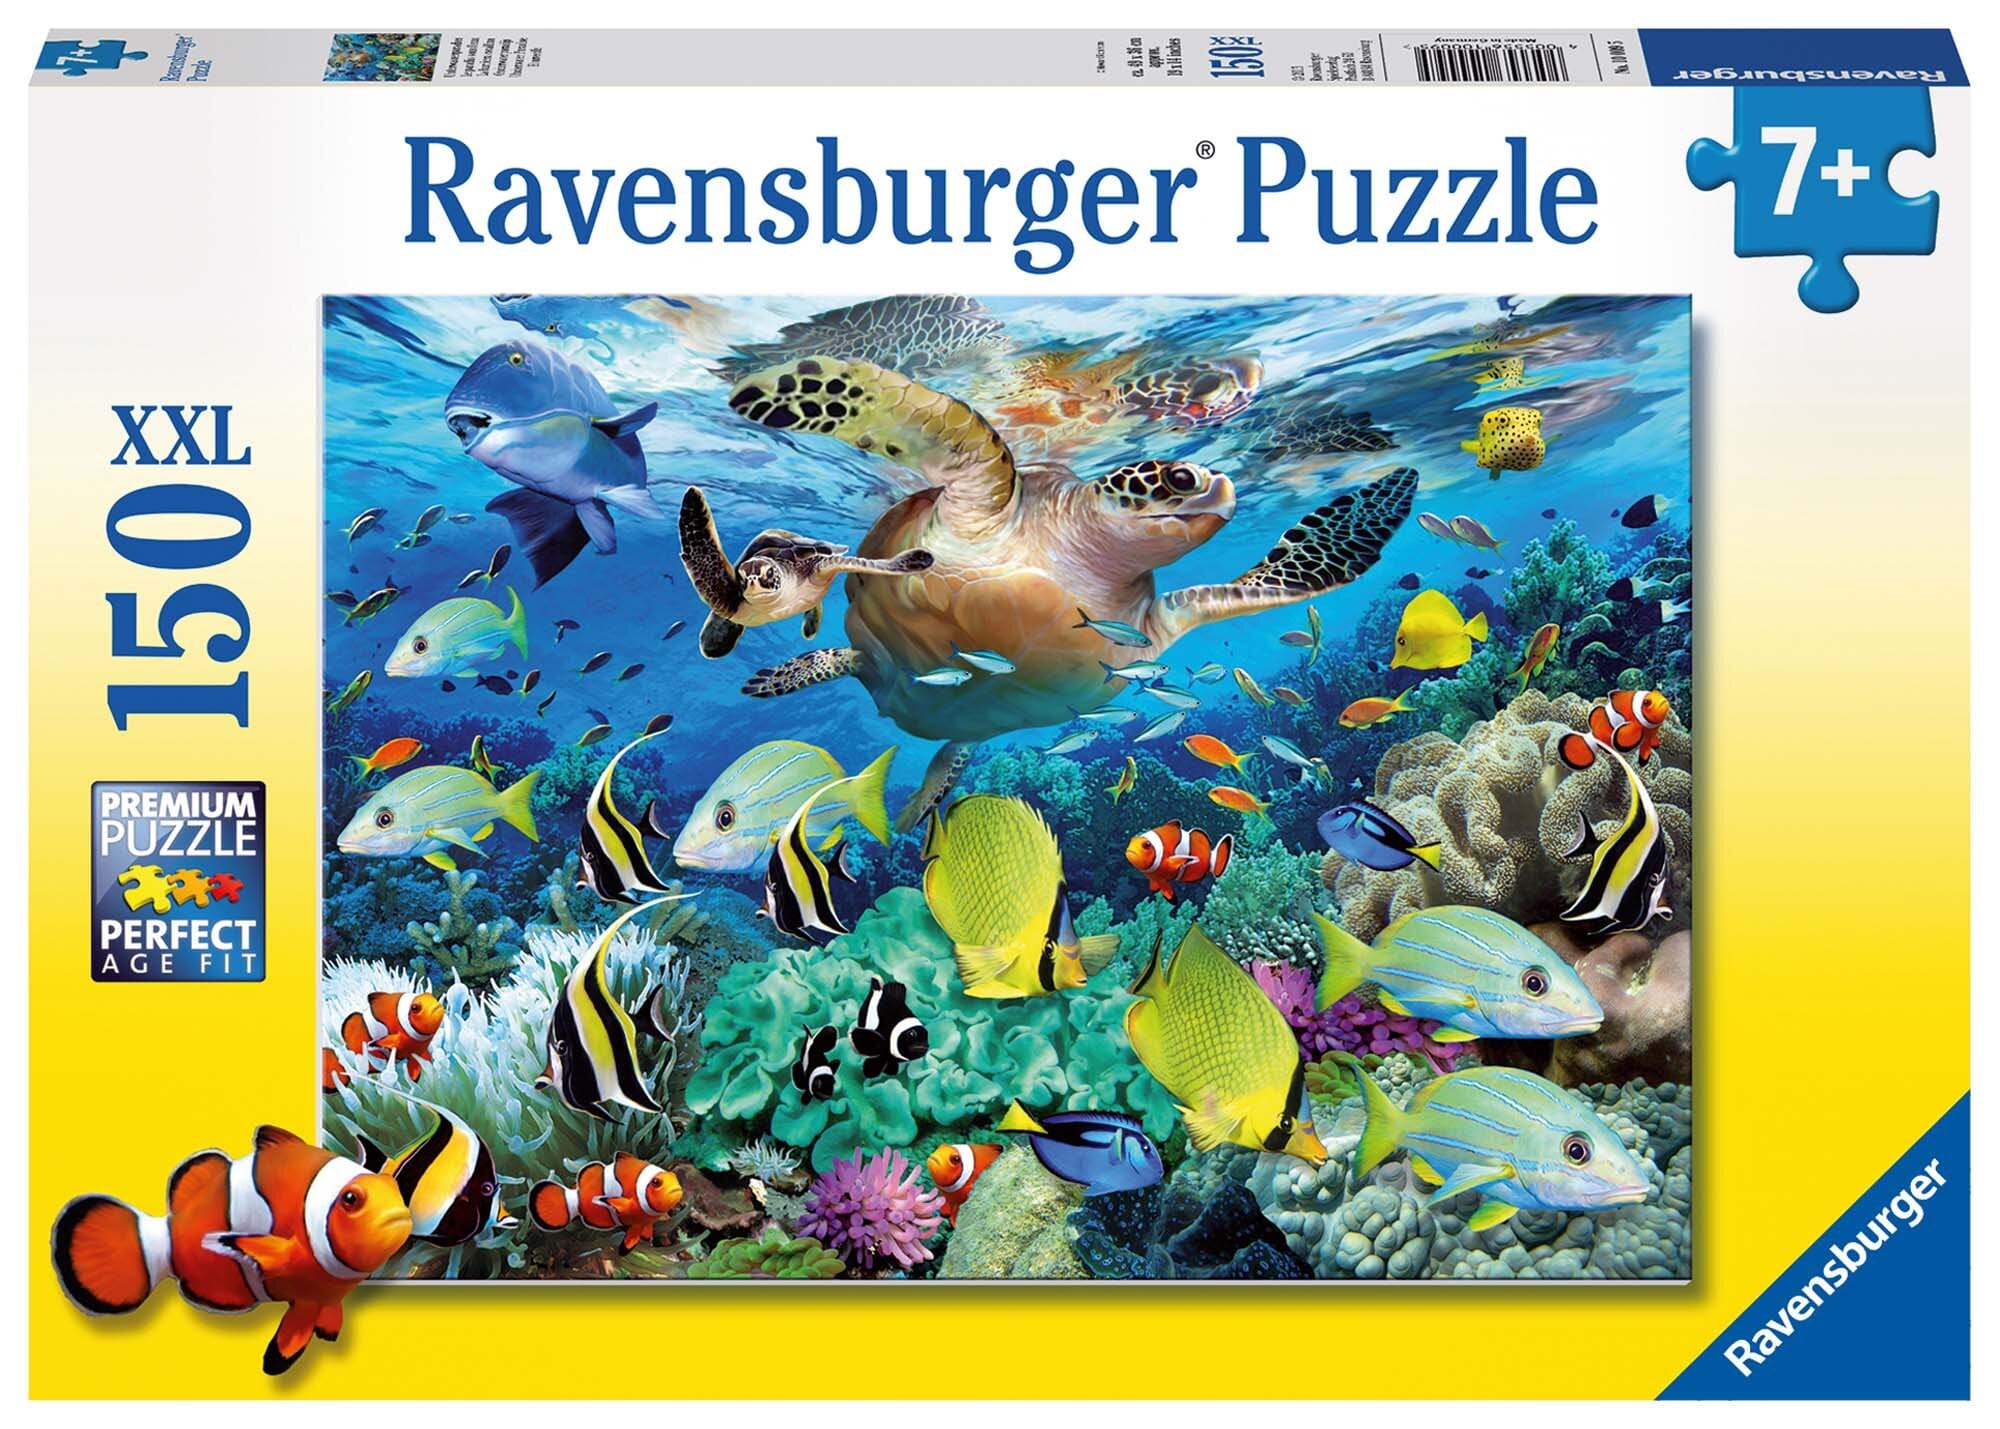 Ravensburger Pussel - Paradis under vattenytan 150 bitar XXL